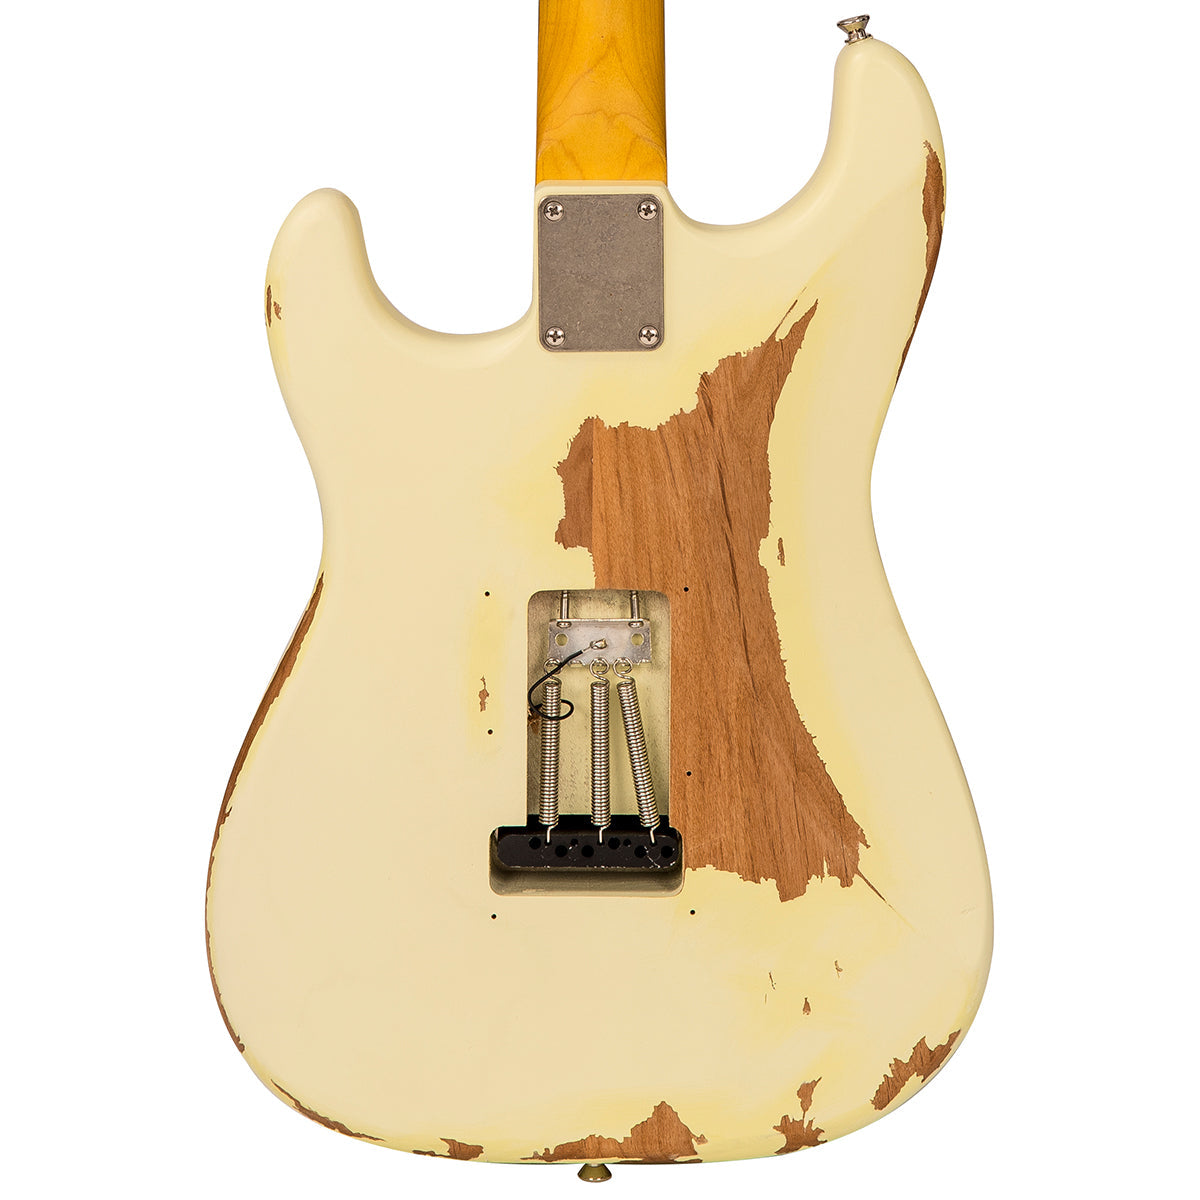 Vintage V6 Thomas Blug Signature Electric Guitar ~ Distressed Vintage White, Electric Guitar for sale at Richards Guitars.